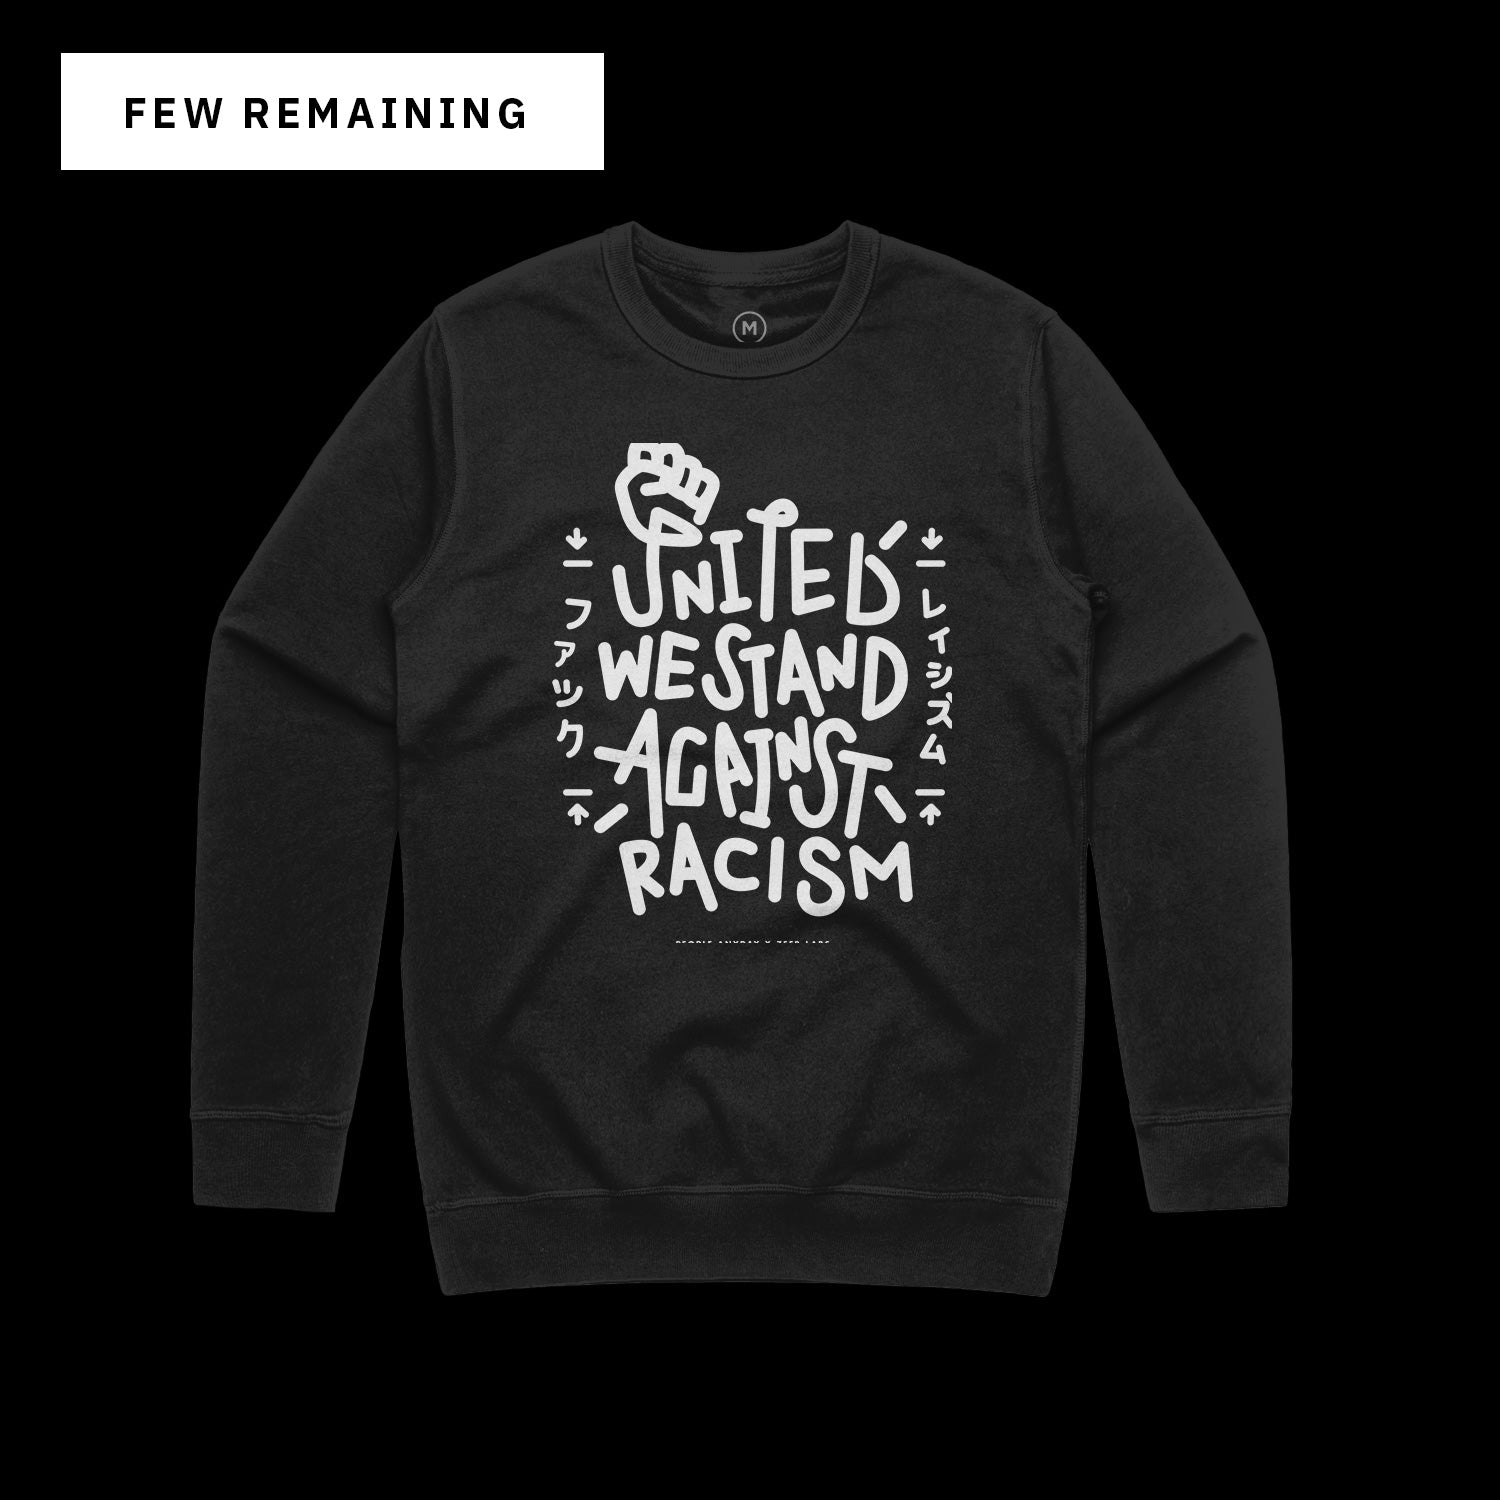 F Racism—Crewsweater—Blk